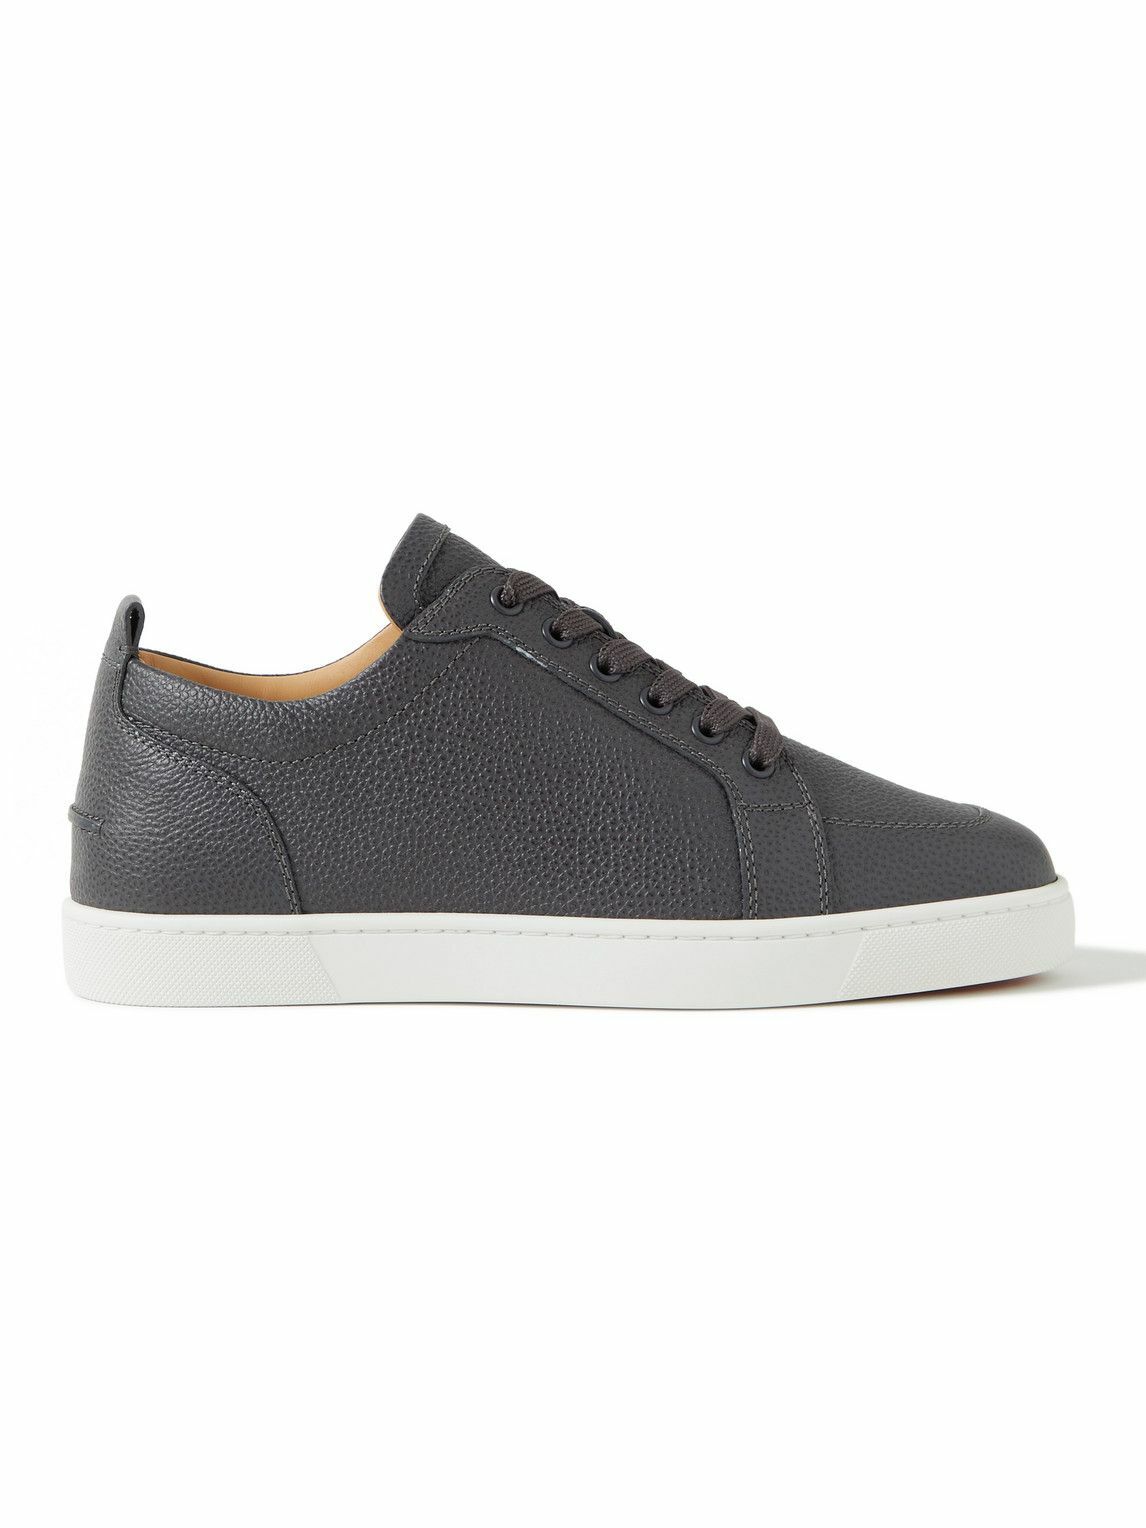 Christian Louboutin - Rantulow Full-Grain Leather Sneakers - Gray ...